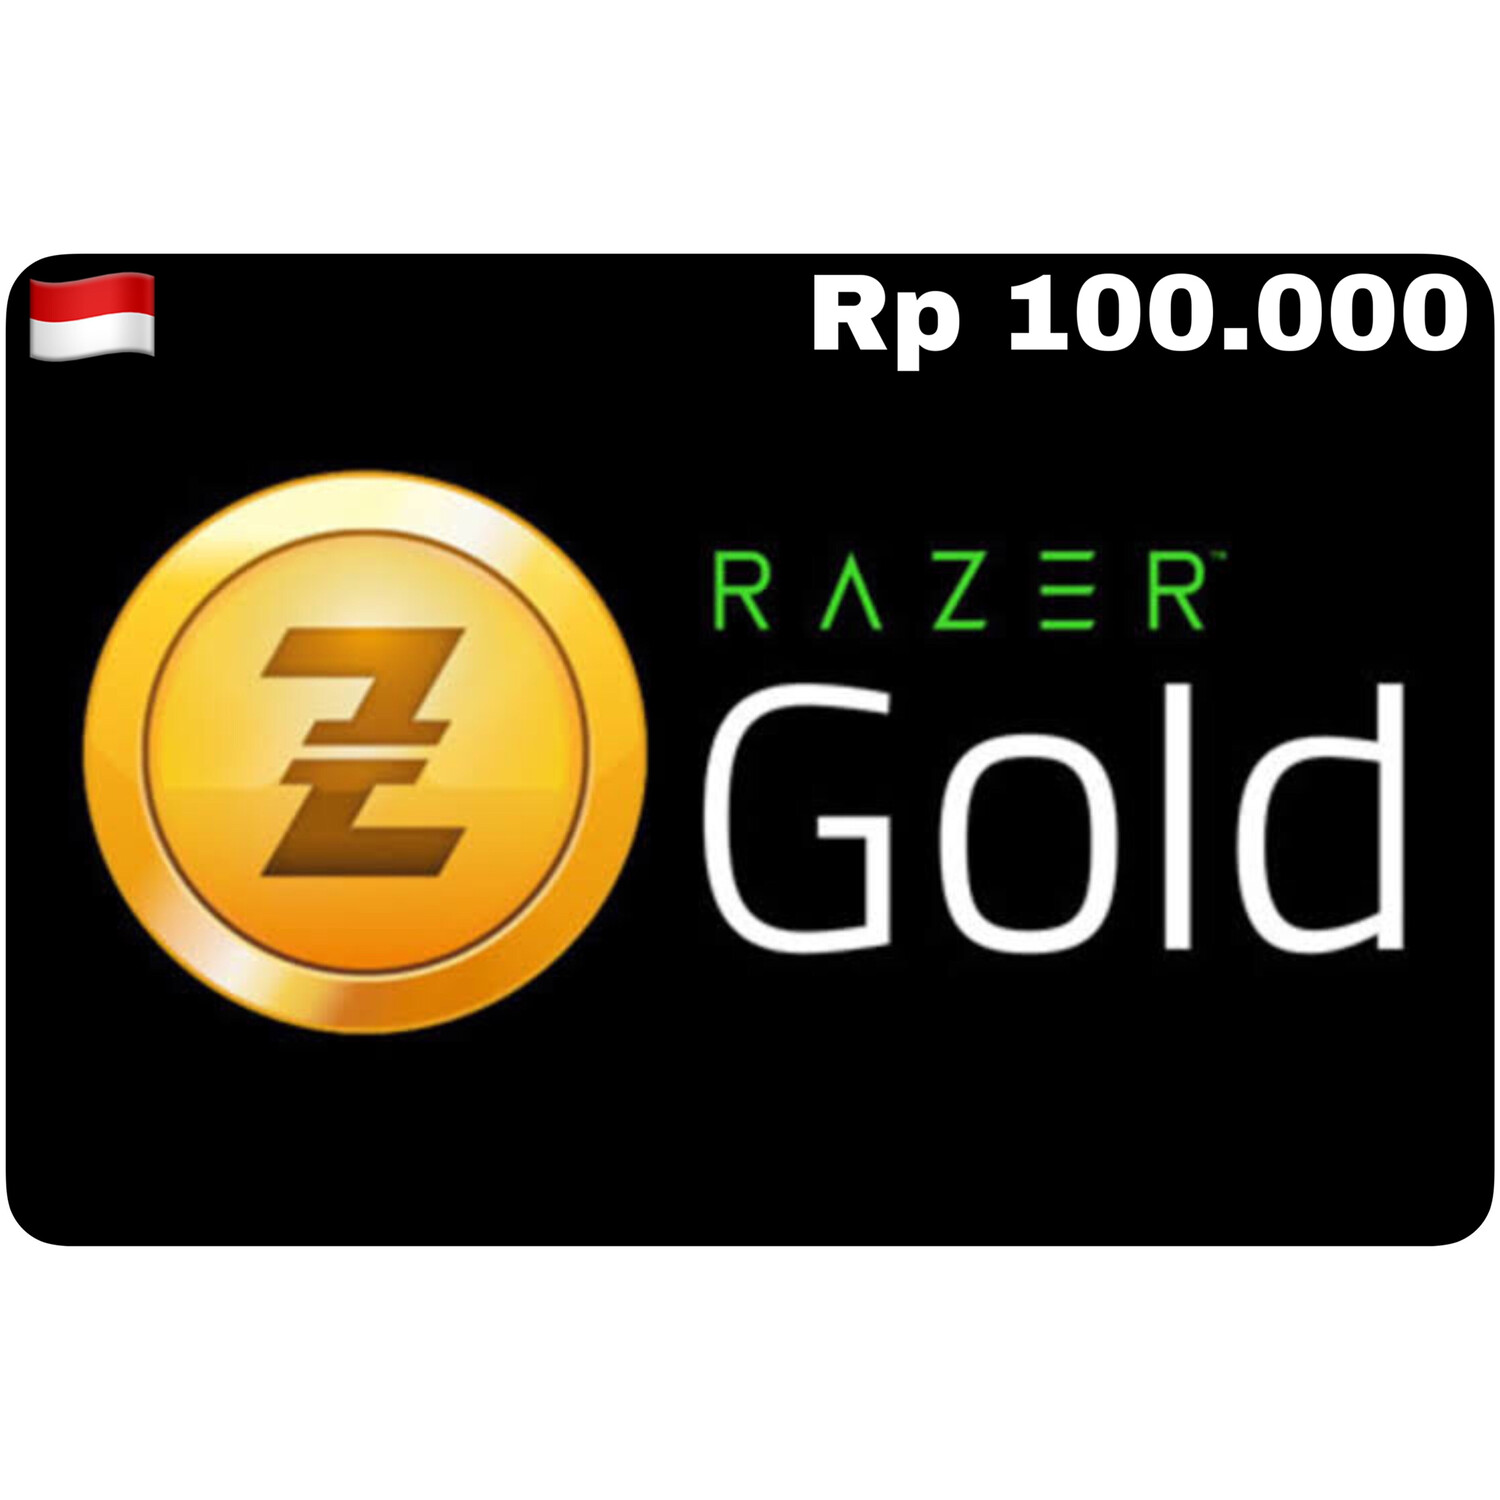 Razer Gold Pin ID Rp 100.000